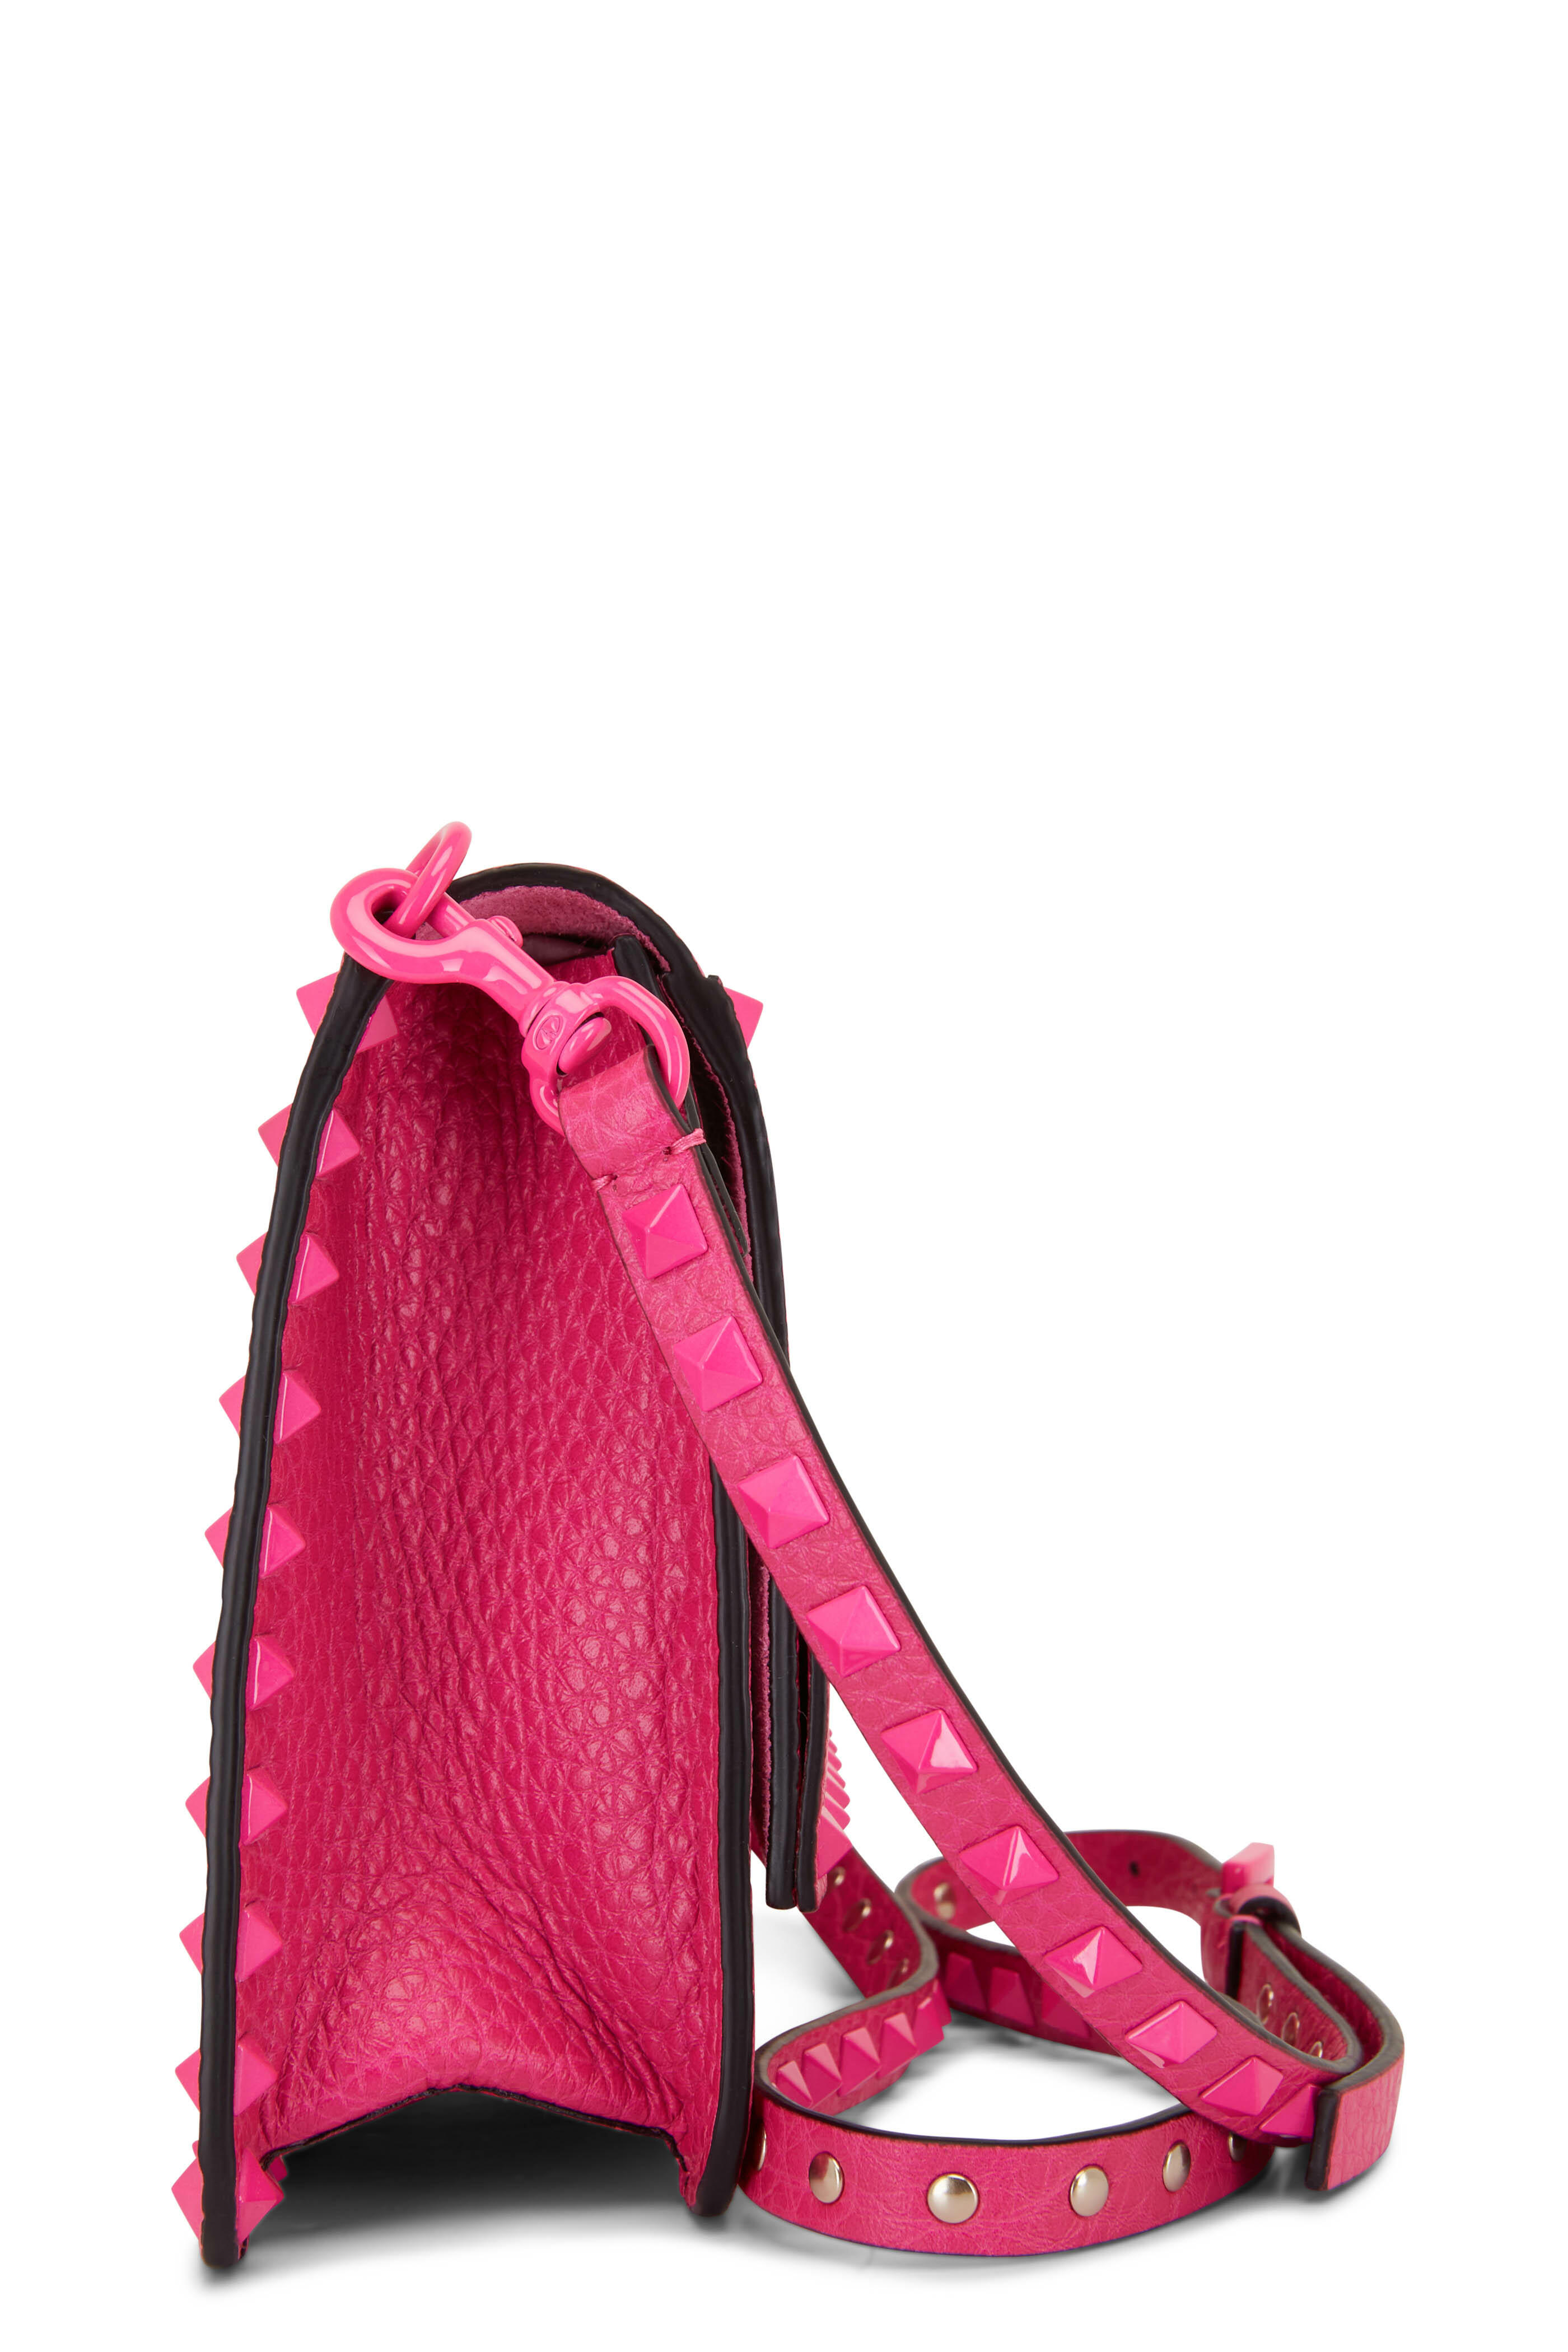 Valentino Rockstud Tote in Hot Pink | MTYCI